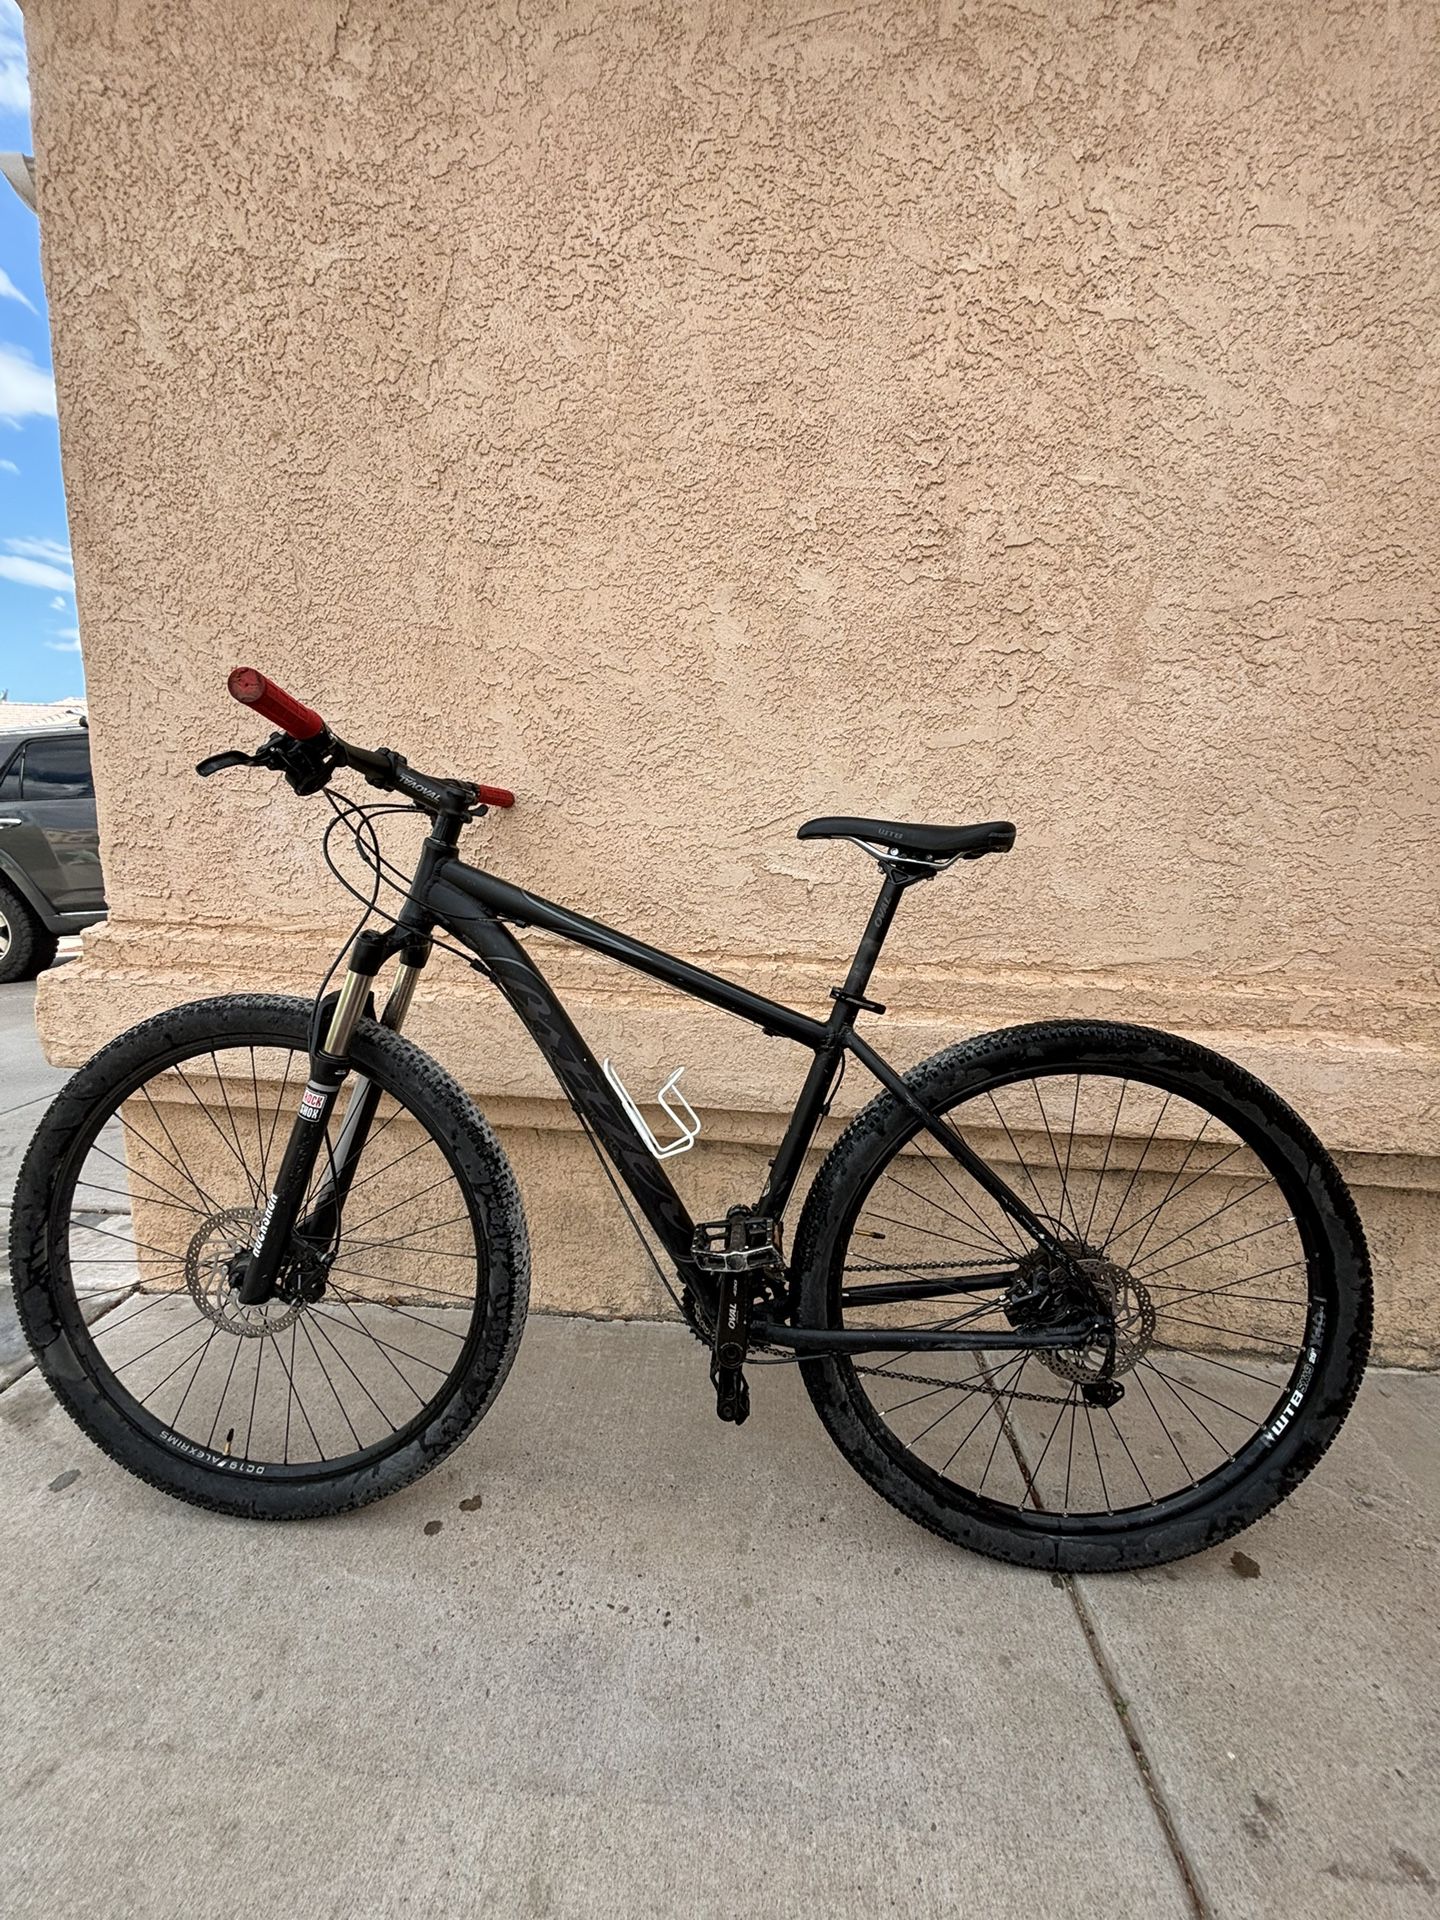 Breezer mountain Bike - Squall 1.0